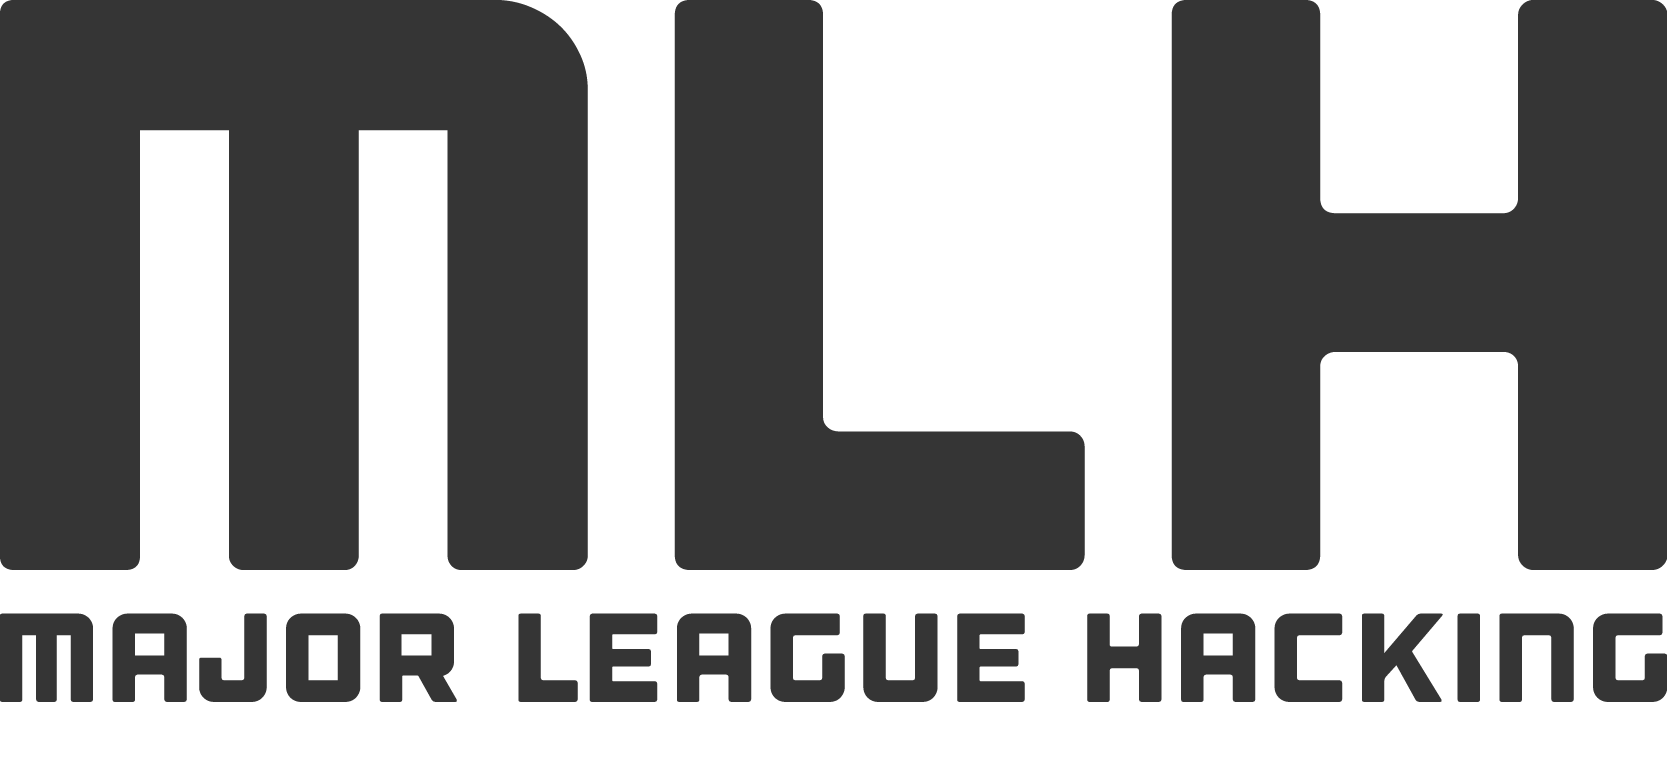 Hacking Logo - MLH Brand Guidelines // Major League Hacking